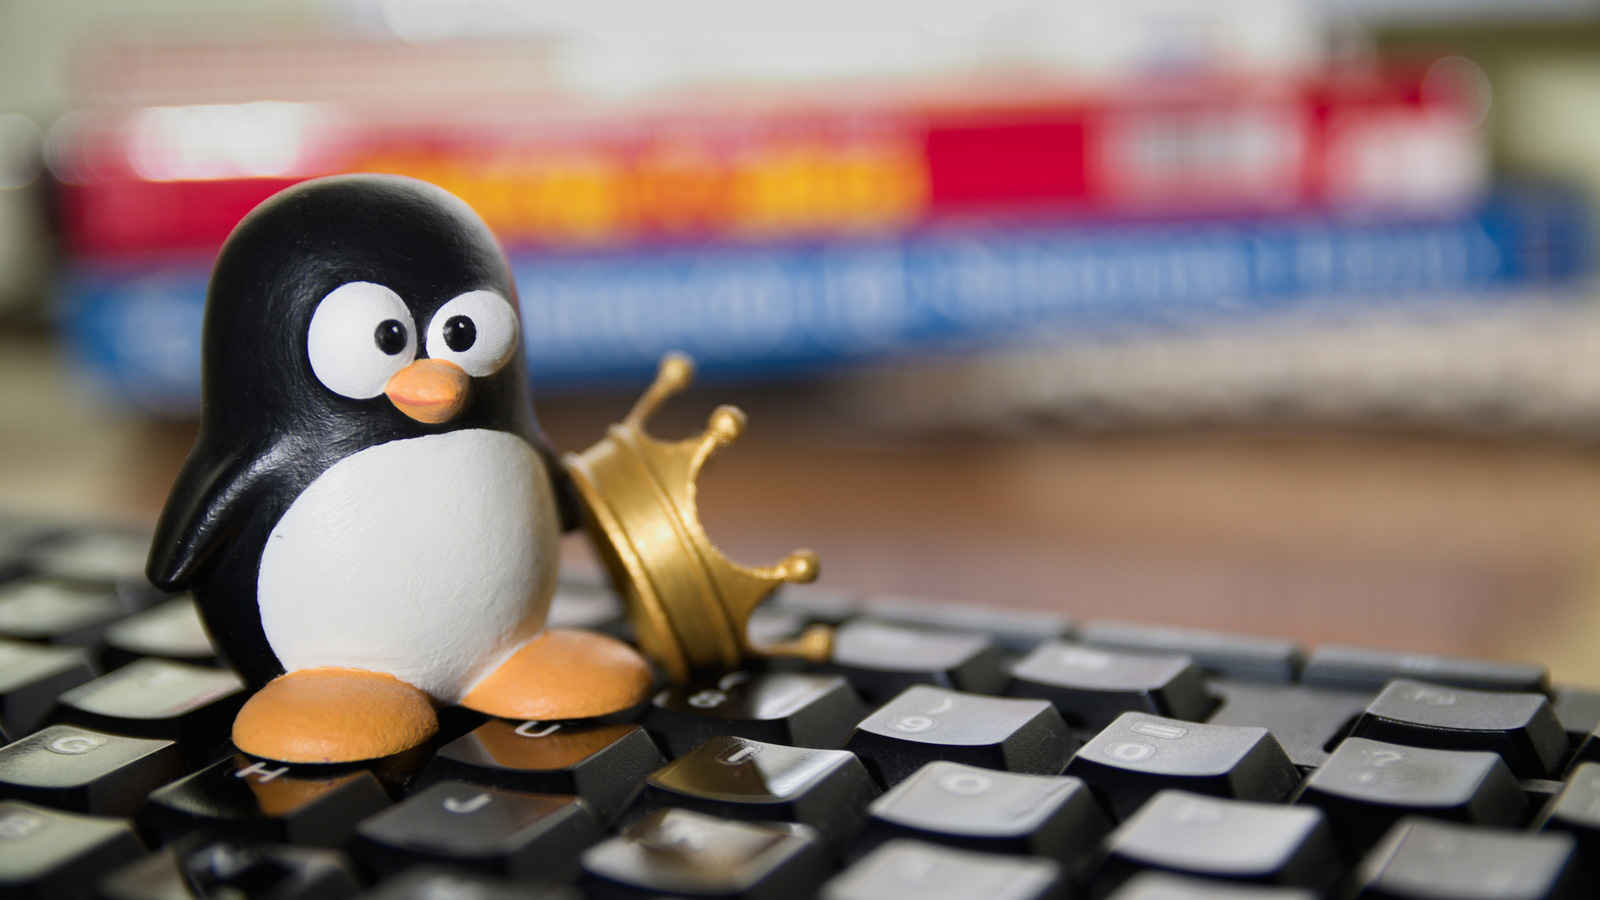 Linux Tux sitting on a keyboard